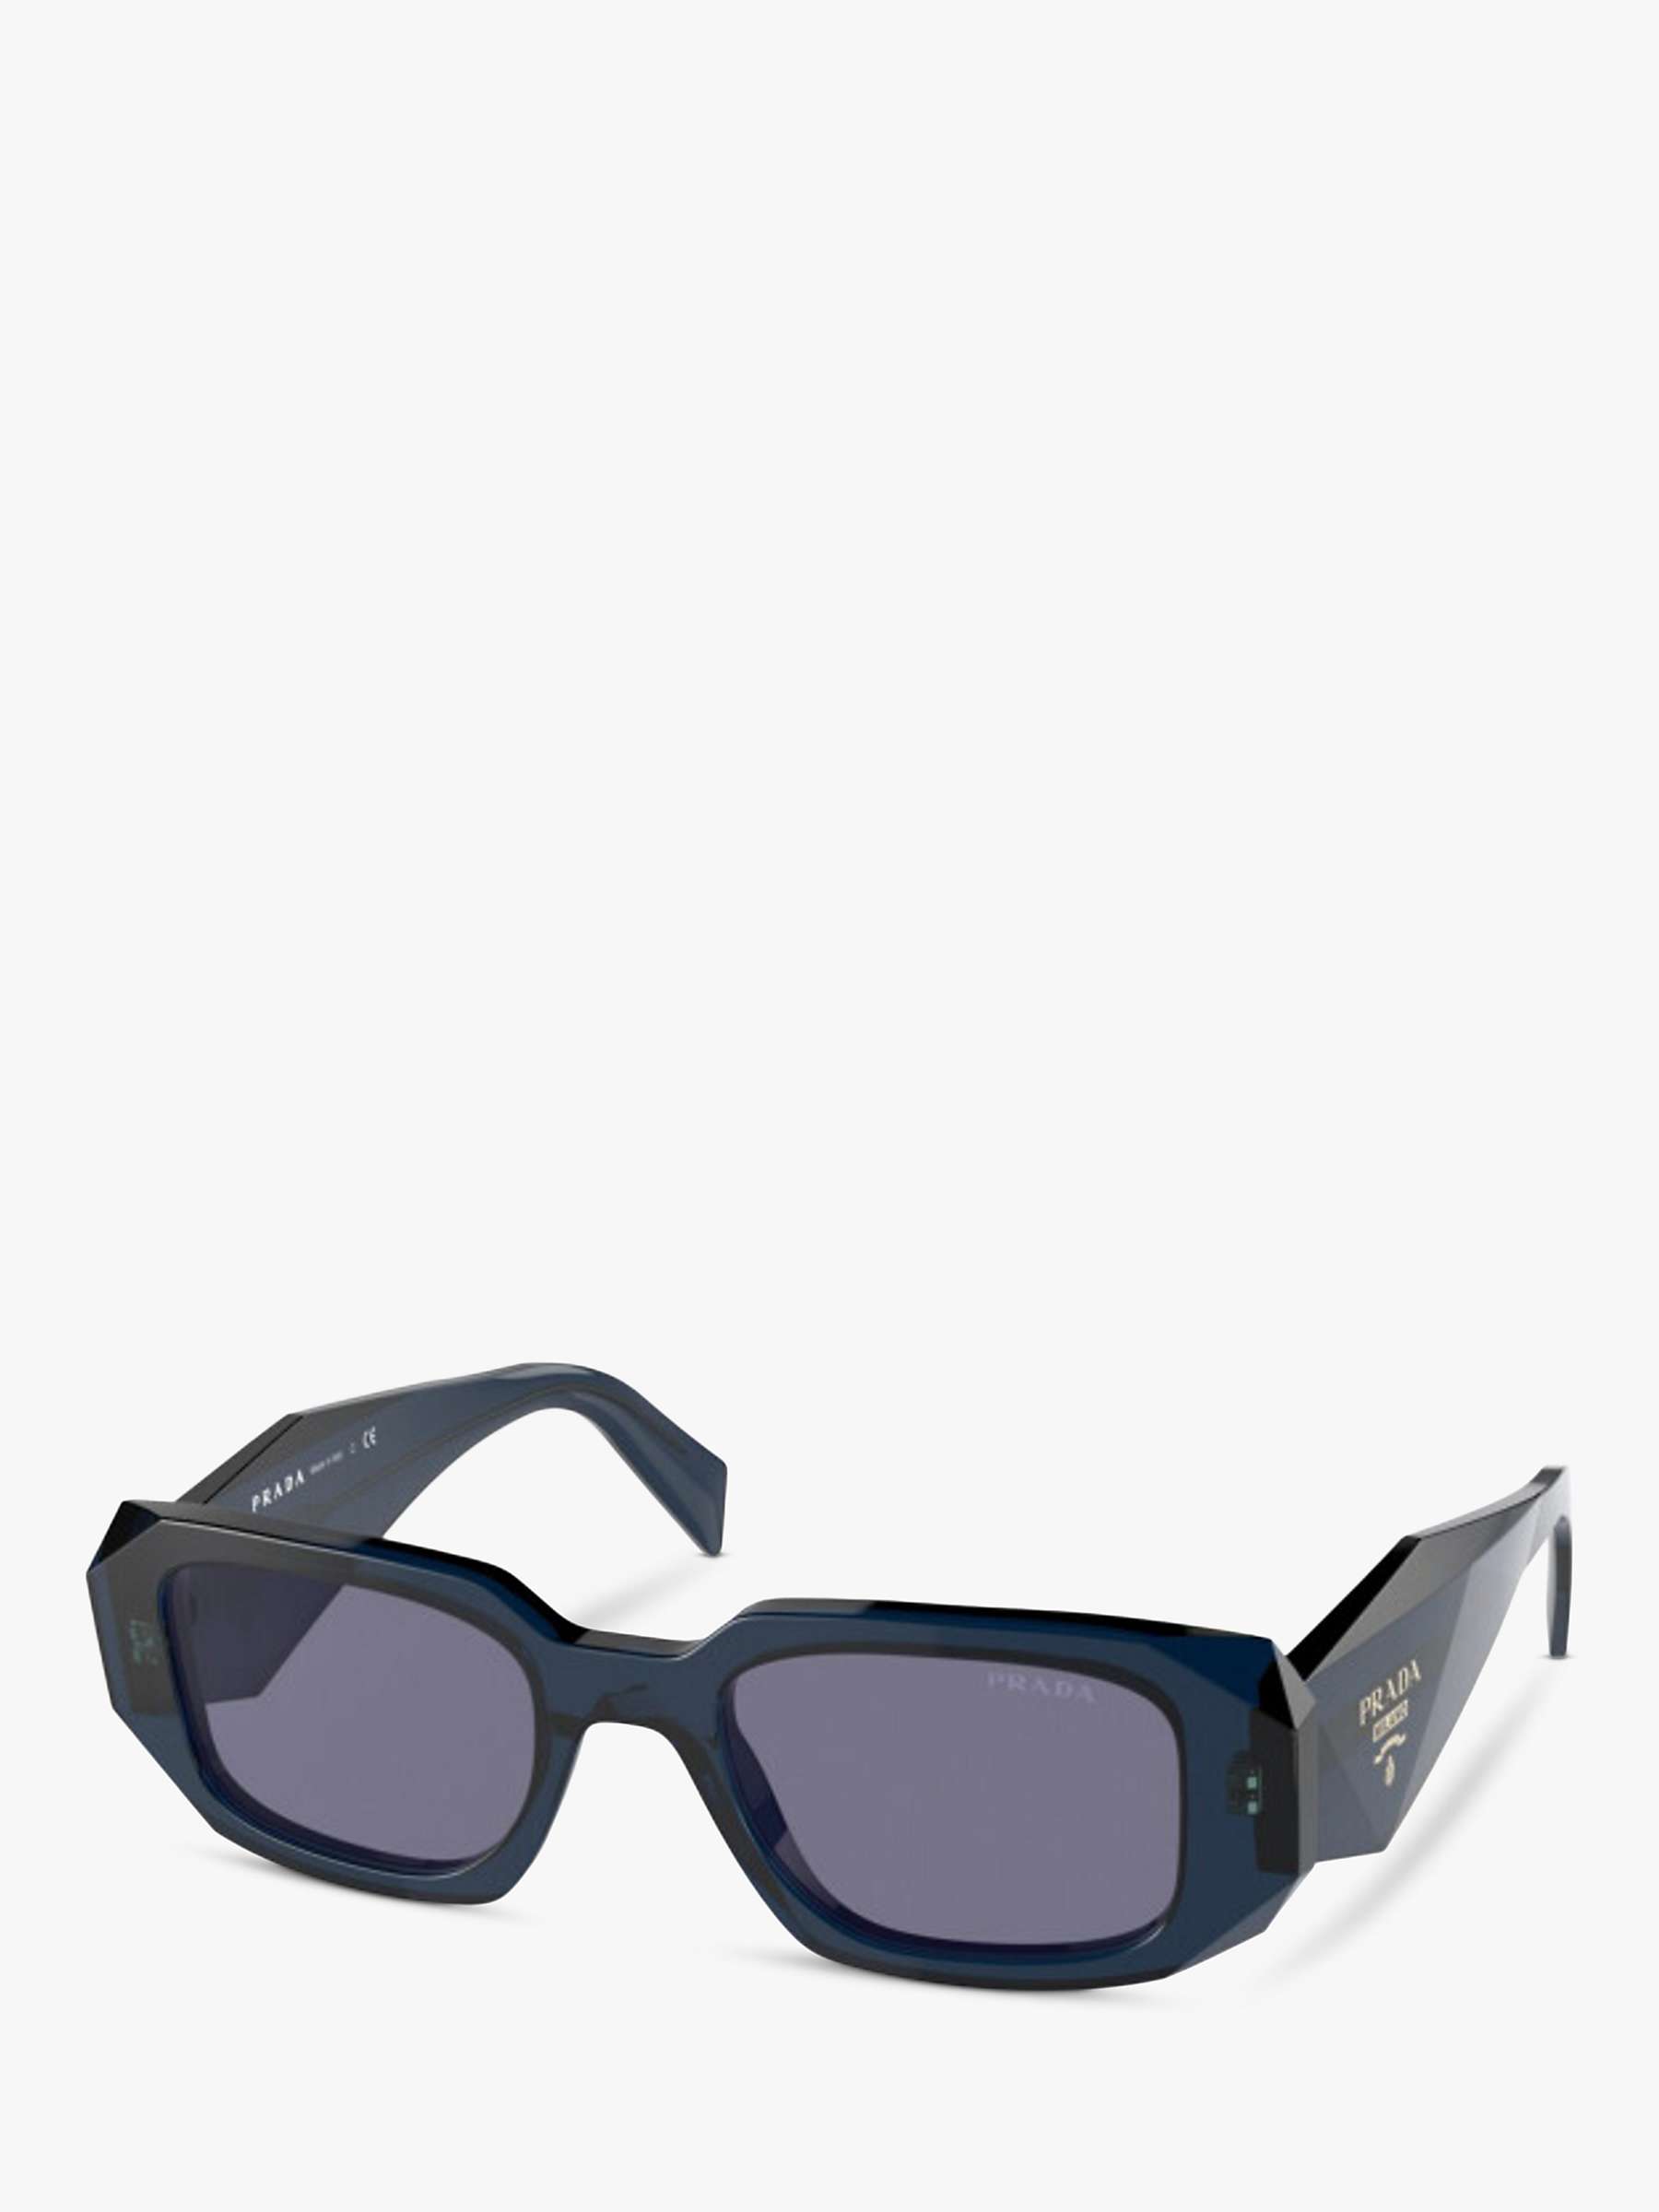 Buy Prada PR 17WS Women's Rectangular Sunglasses, Blue Crystal/Blue Online at johnlewis.com